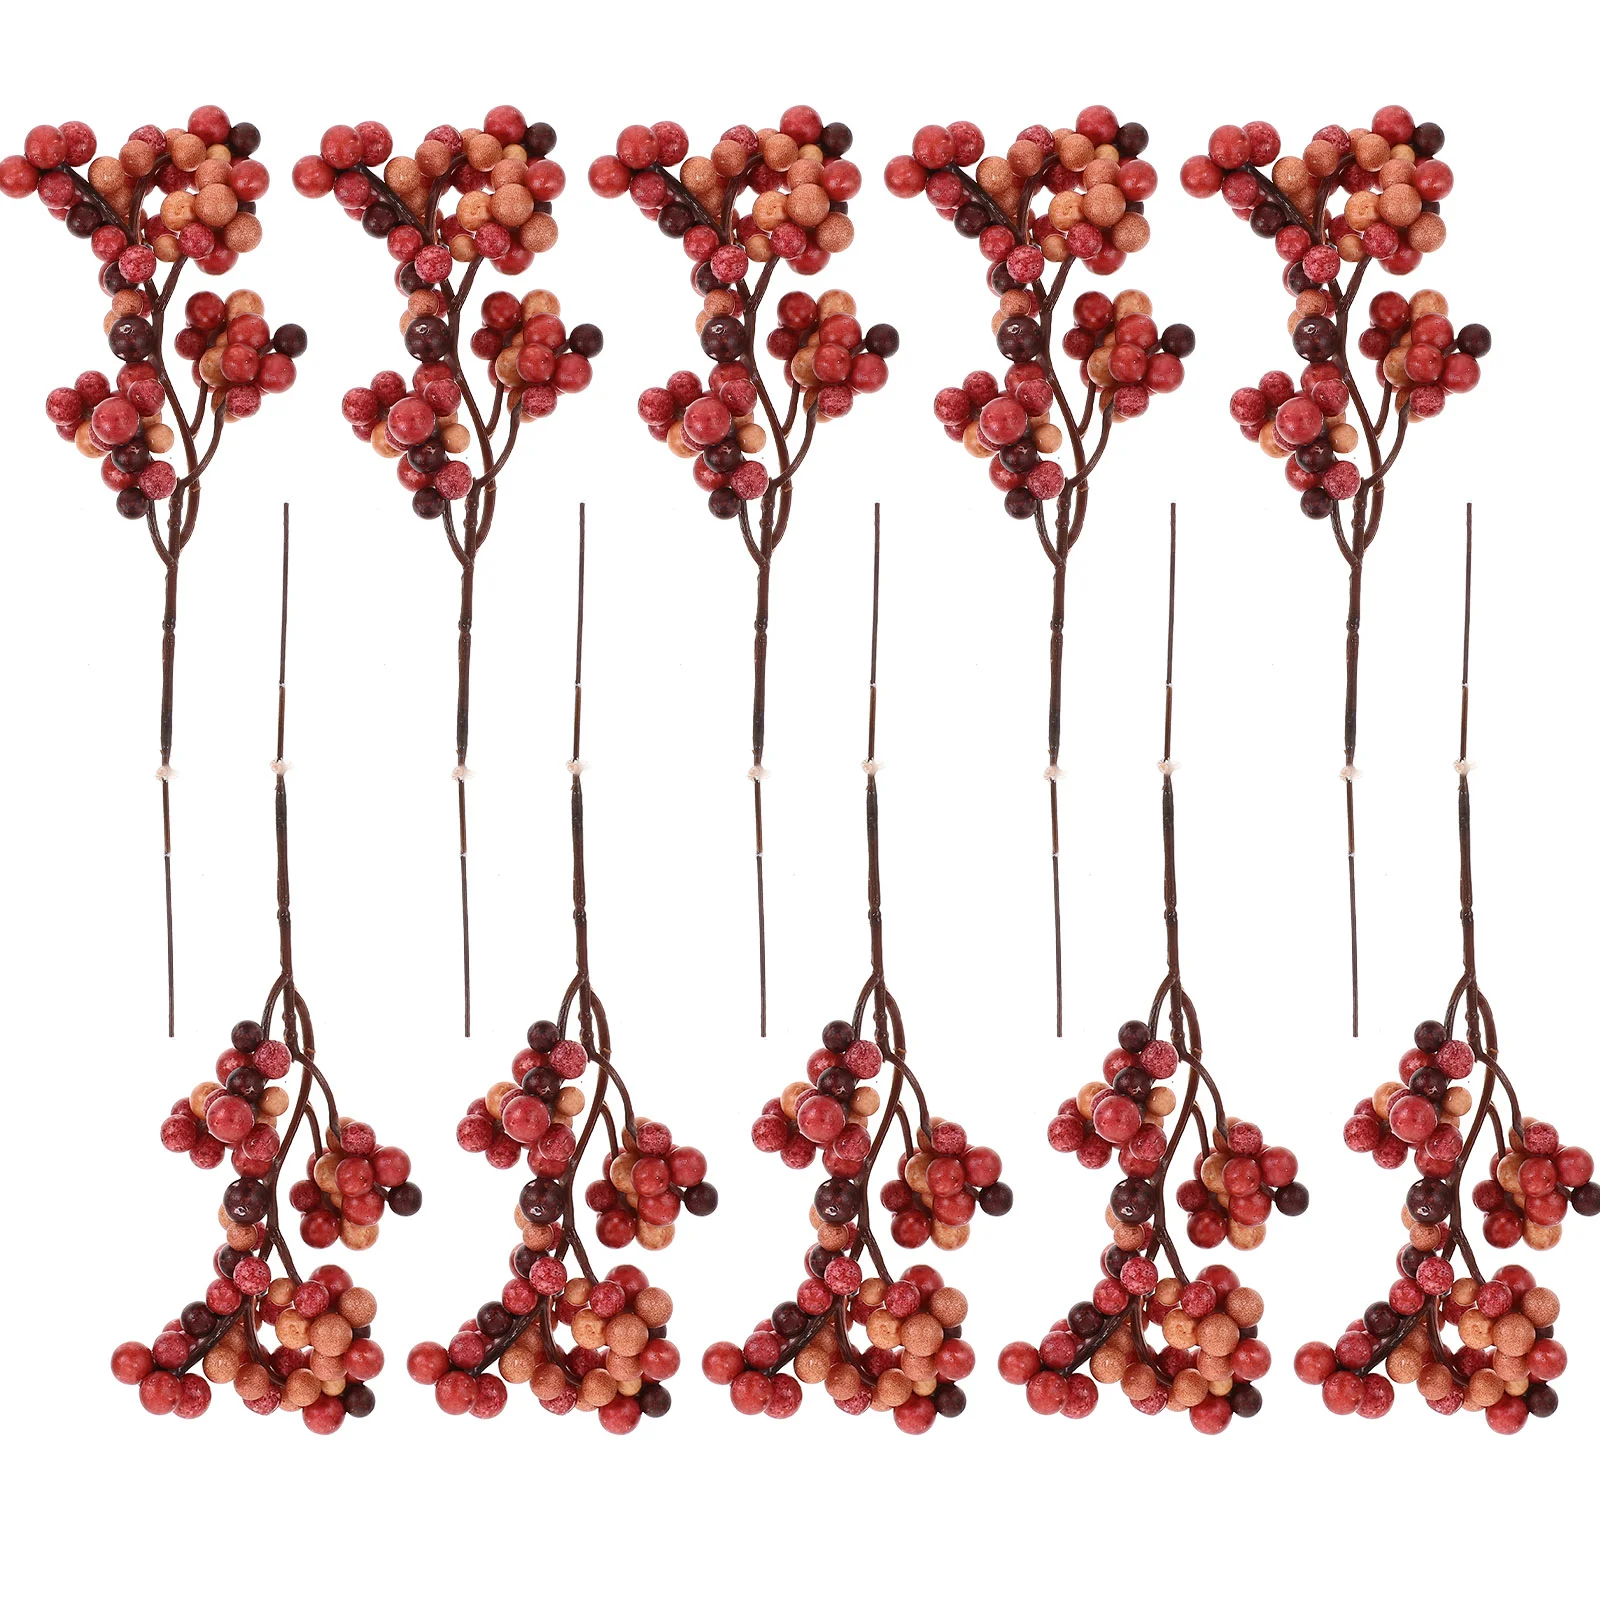 

12 Pcs Wreath Artificial Berry Christmas Garland Decor Branch Picks Plastic Flower Arrangement Decorations Stems